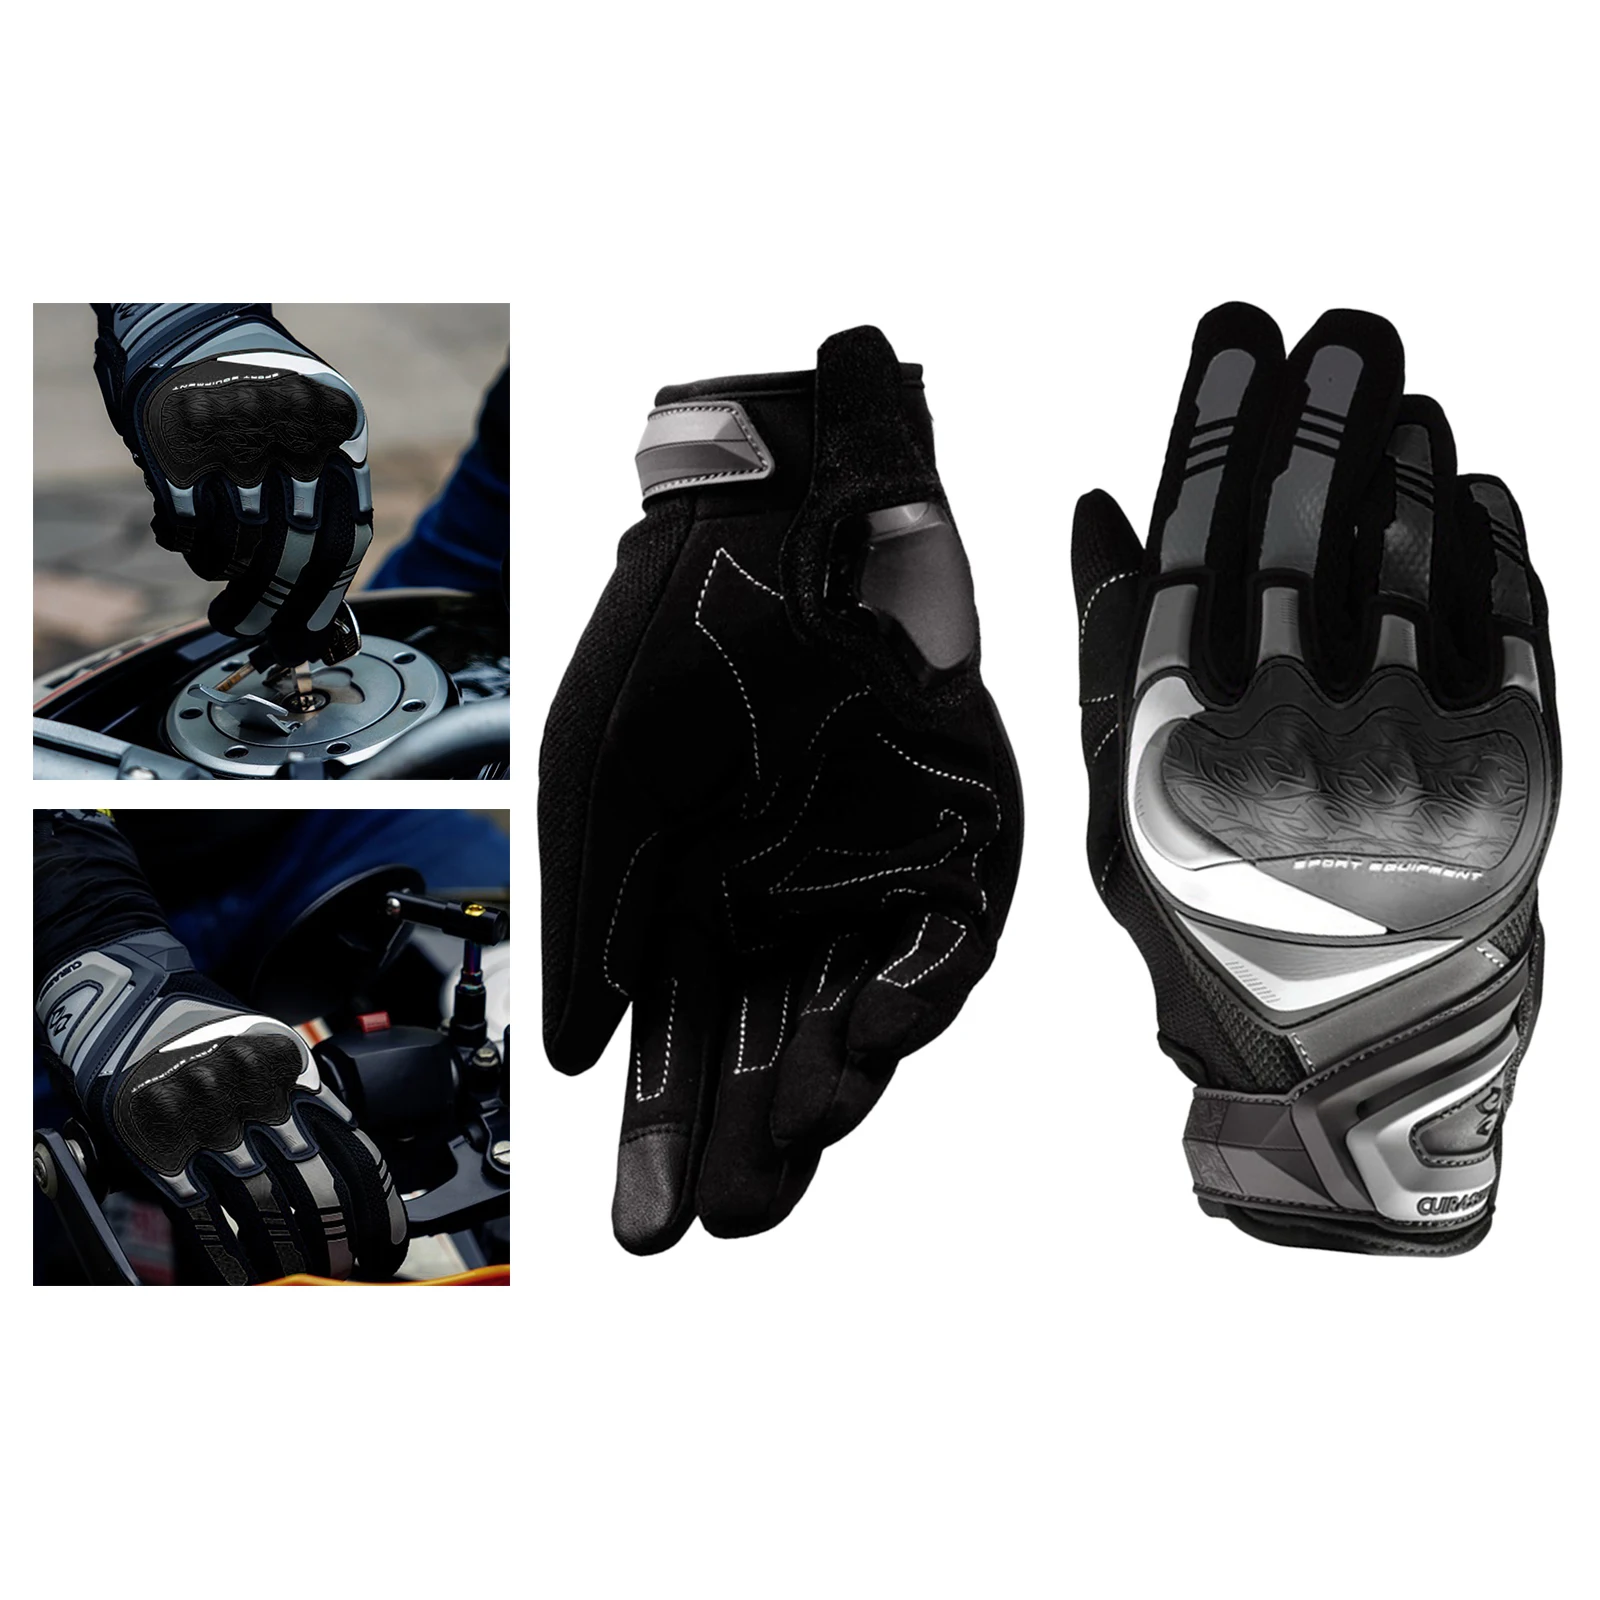 Motorcycle Gloves Durable Touch Screen Reflective Motocross Motorbike Biker Racing Car Riding Gloves Men